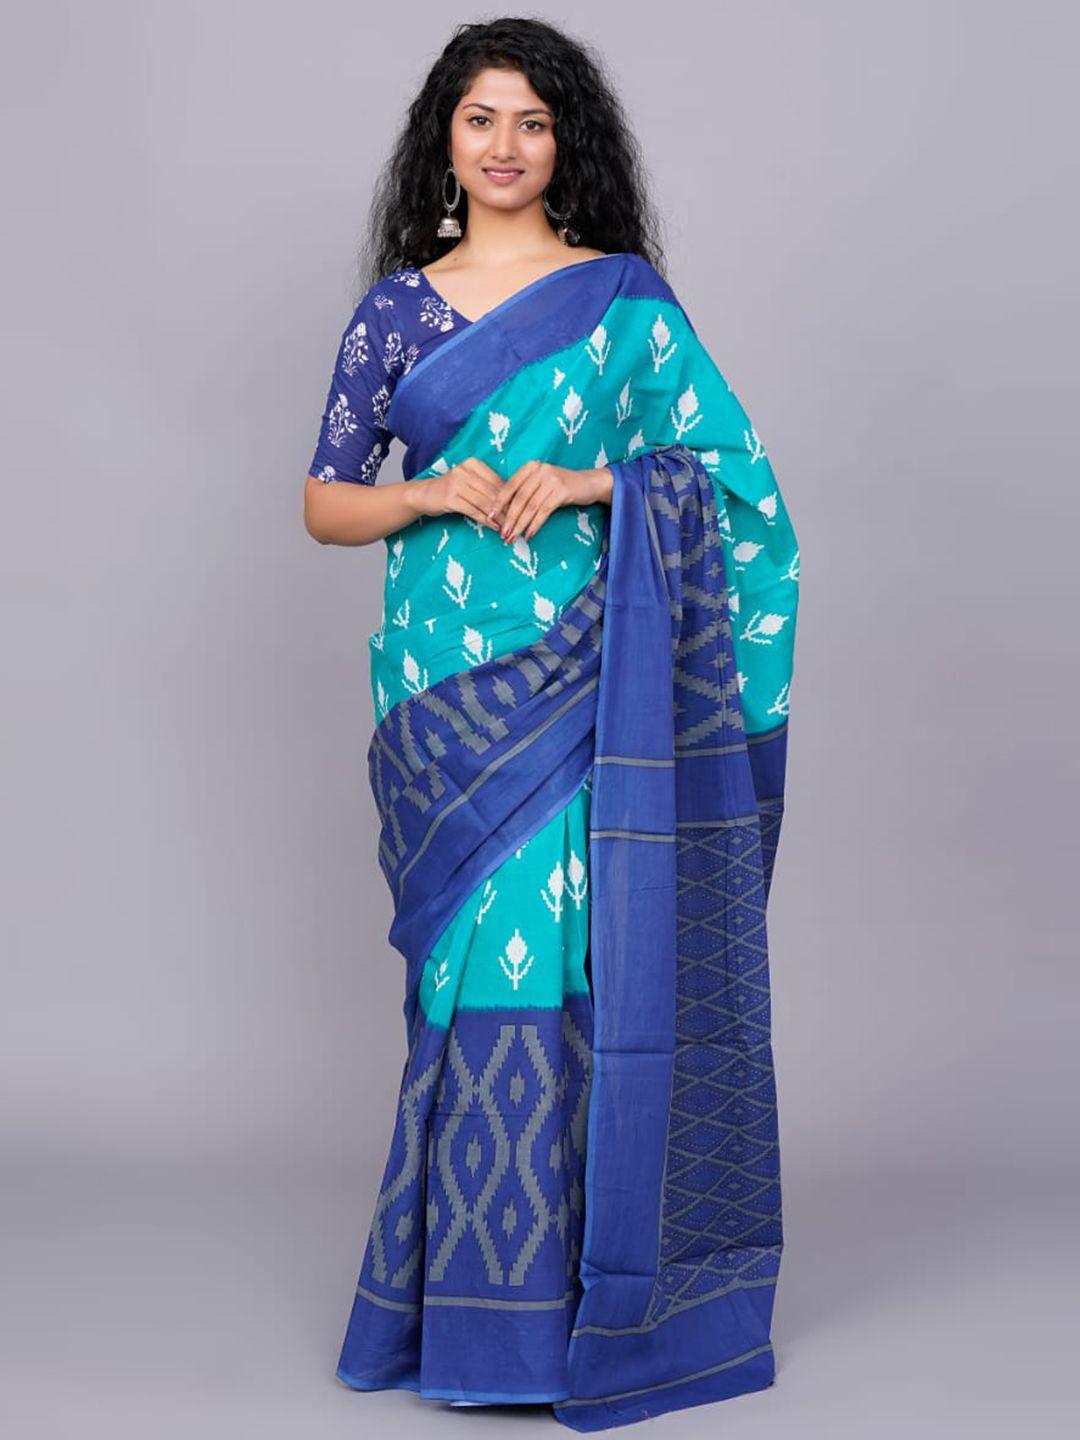 clothonus turquoise blue & white ethnic motifs jaali pure cotton block print saree